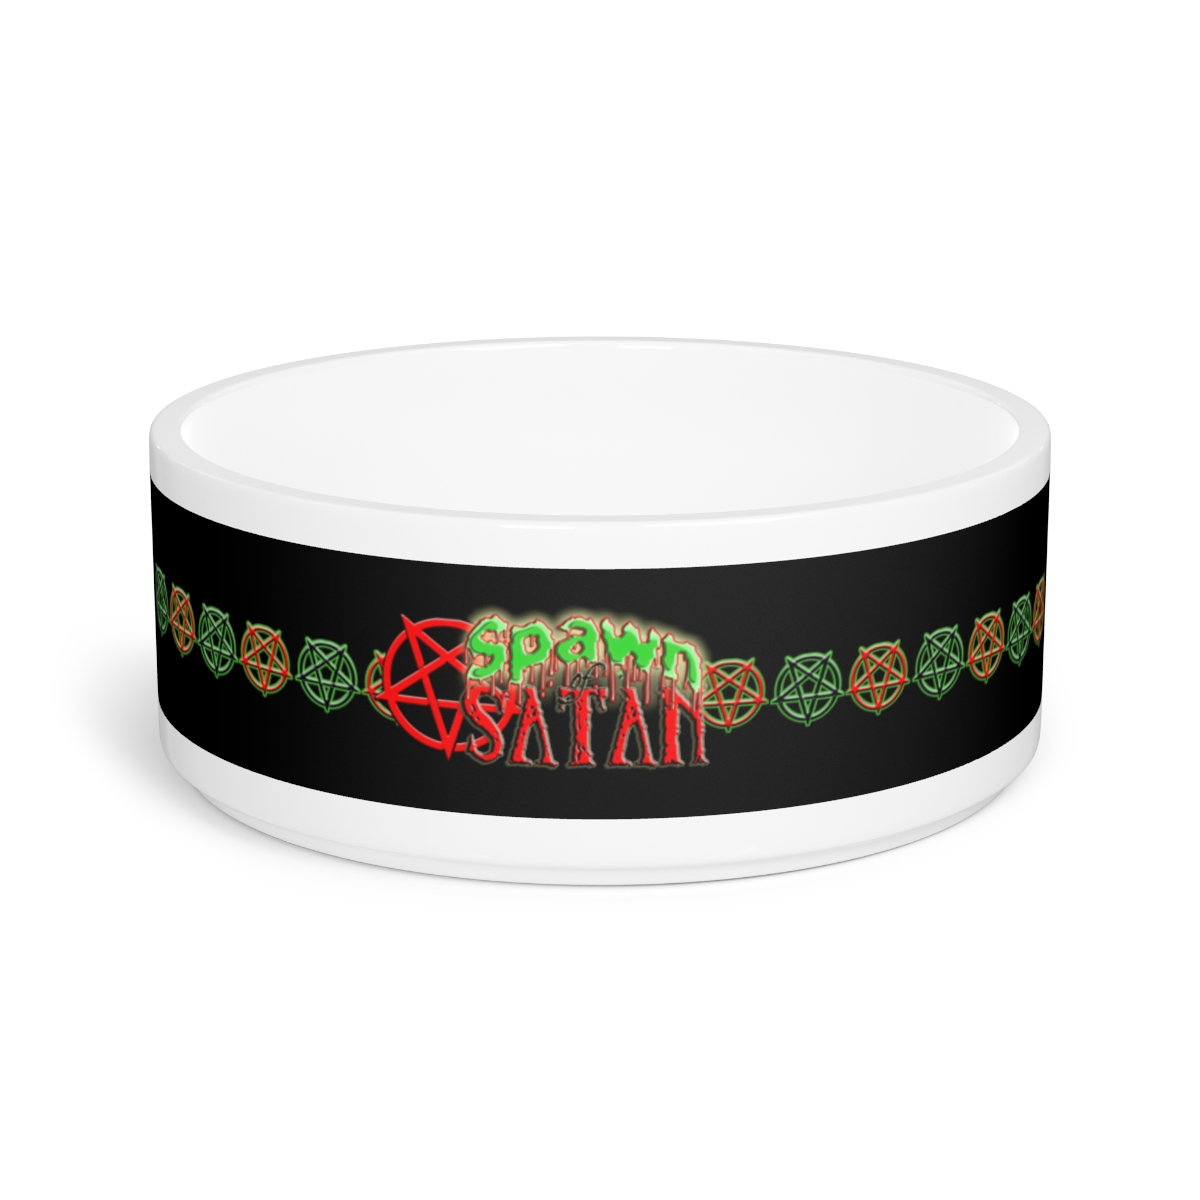 "Spawn of Satan" Ceramic Pet Bowl product thumbnail image